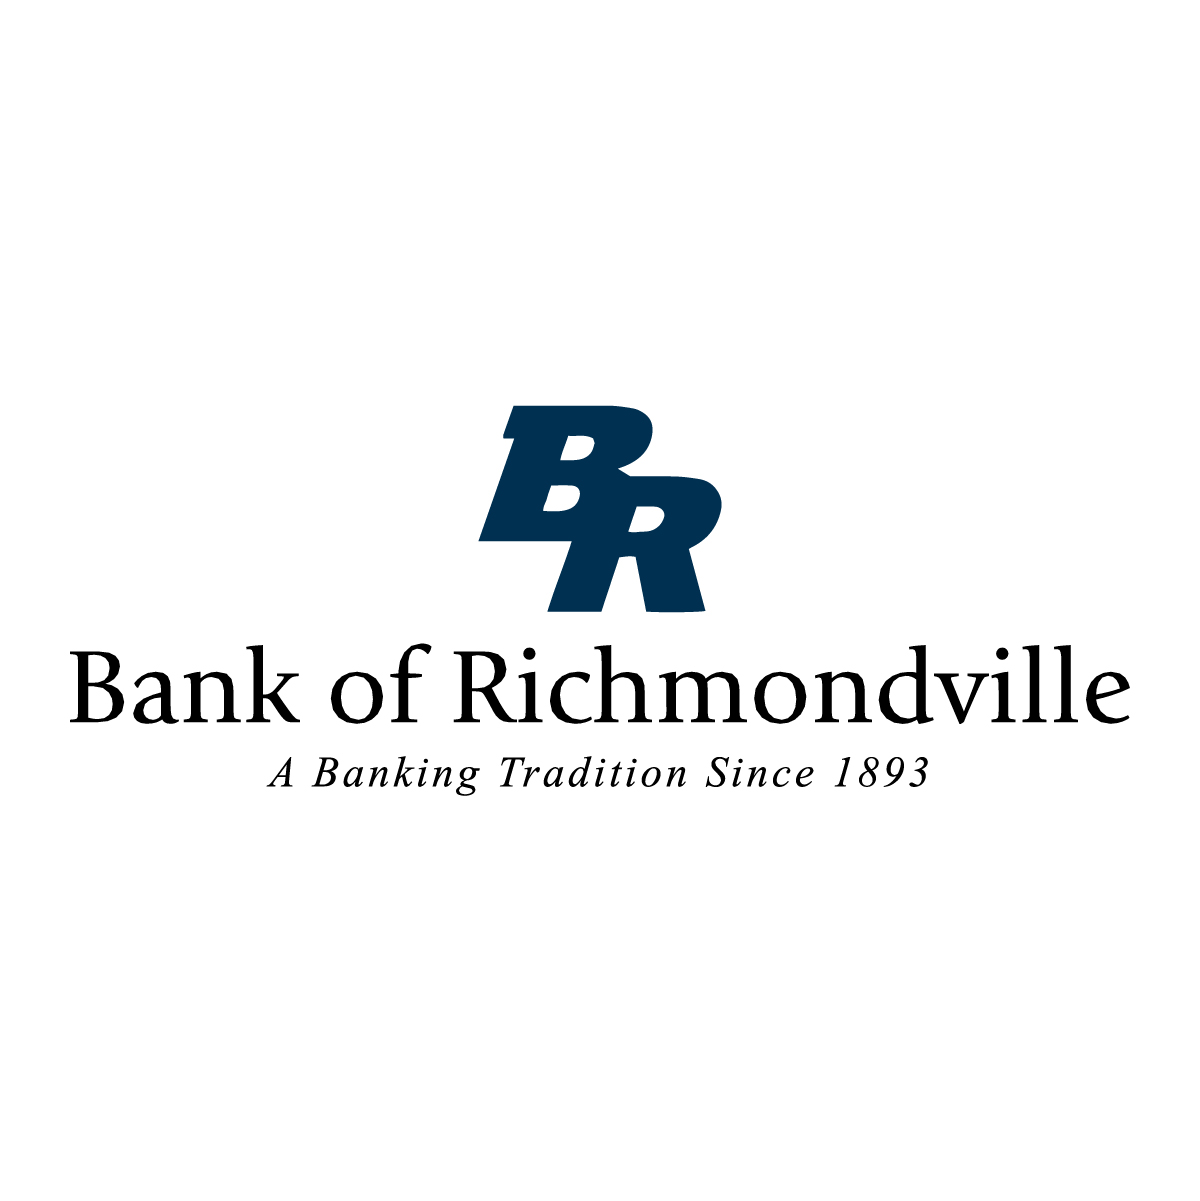 Bank of Richmond